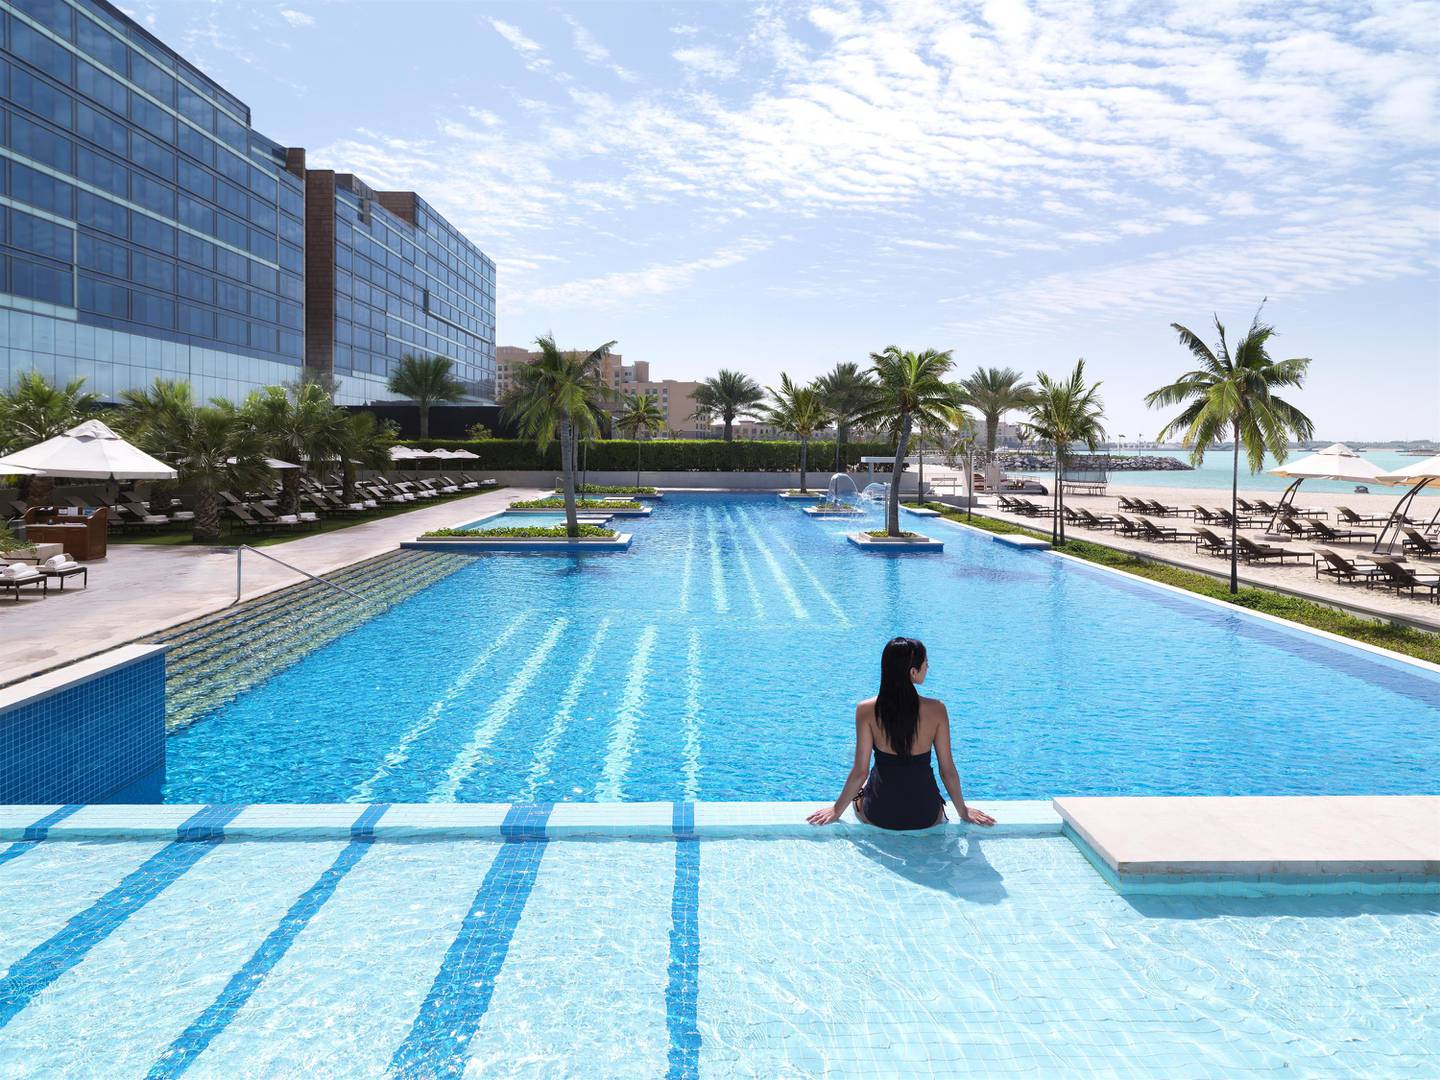 Fairmont Bab Al Bahr offers poolside lounging and Khor Al Maqta views. Photo: DCT Abu Dhabi